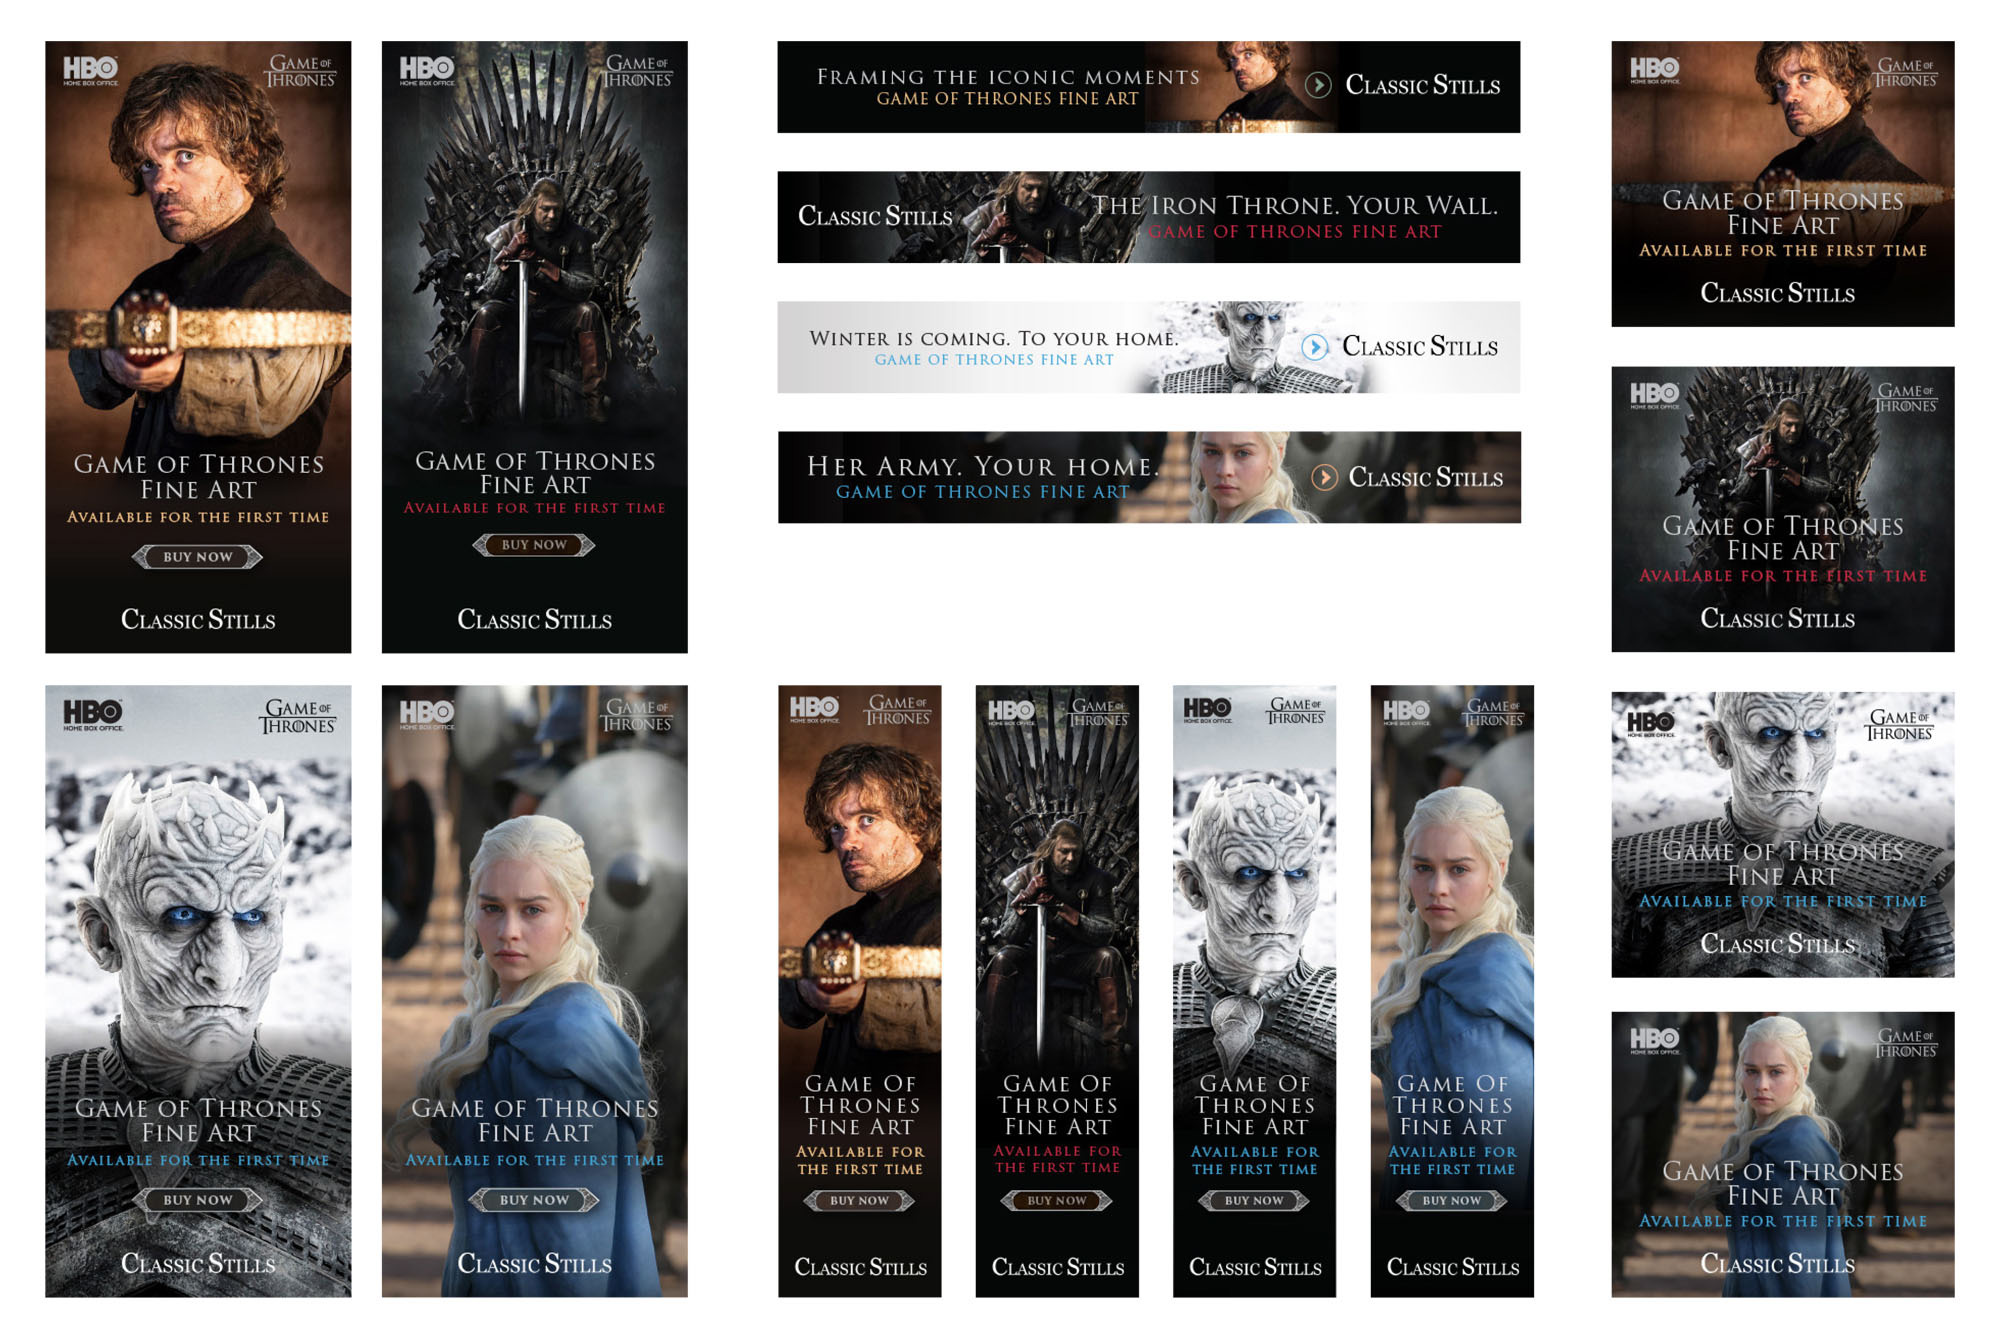 Classic Stills Game of Thrones social media ad designs.